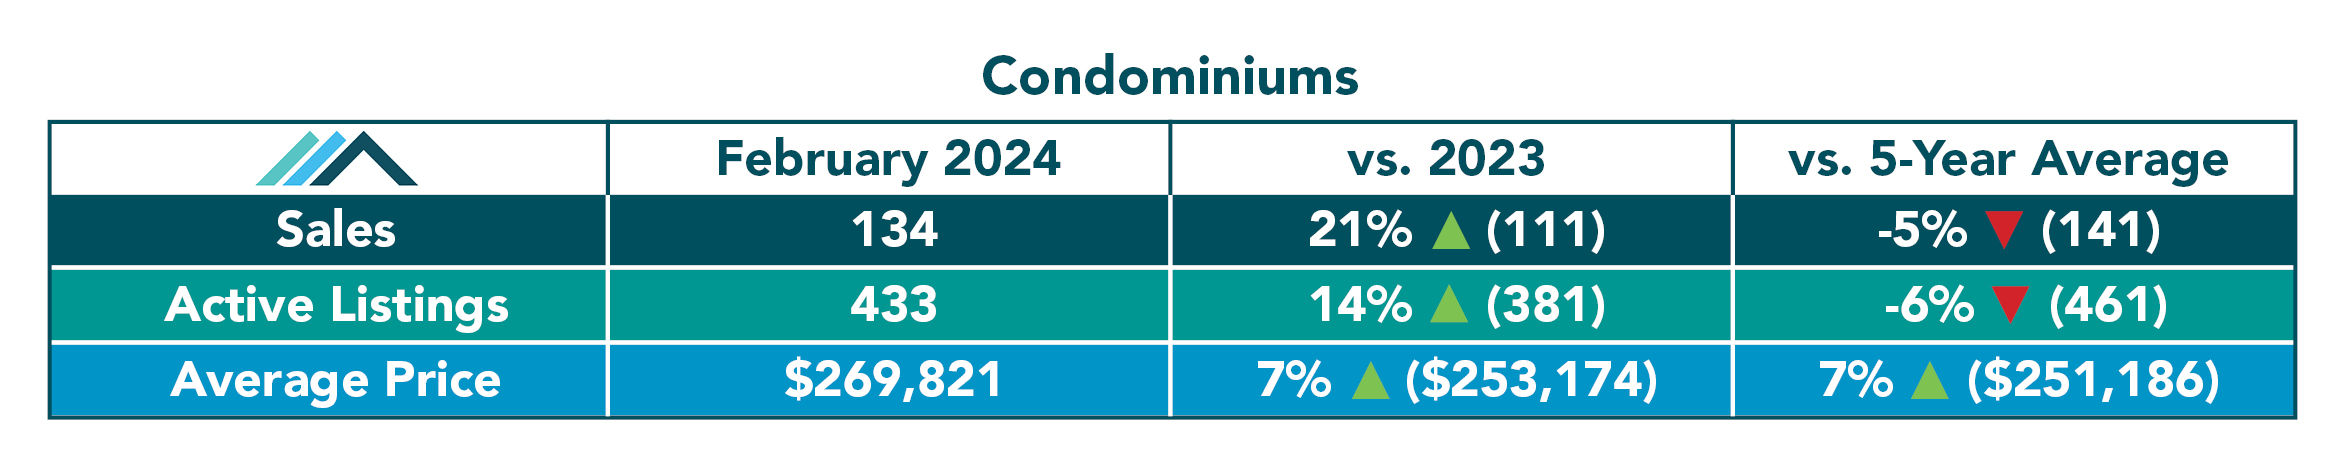 Condominium-Tables-Feb-2024.jpg (417 KB)